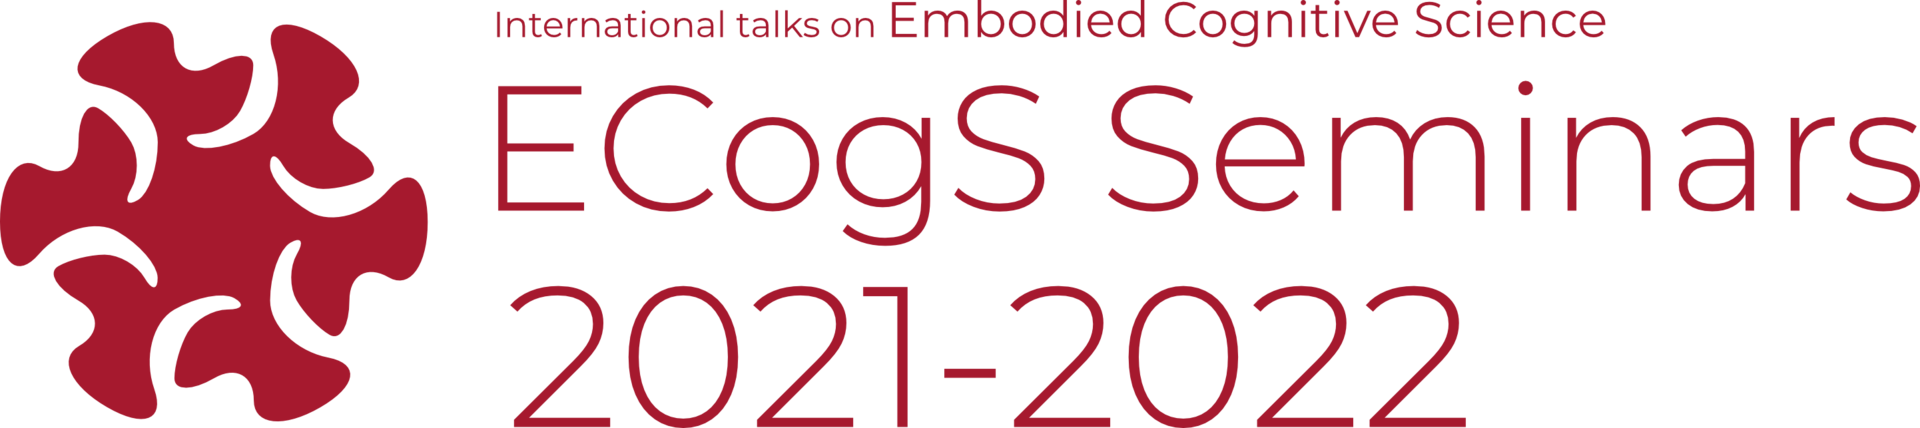 ecogs seminars 2021-2022 logo